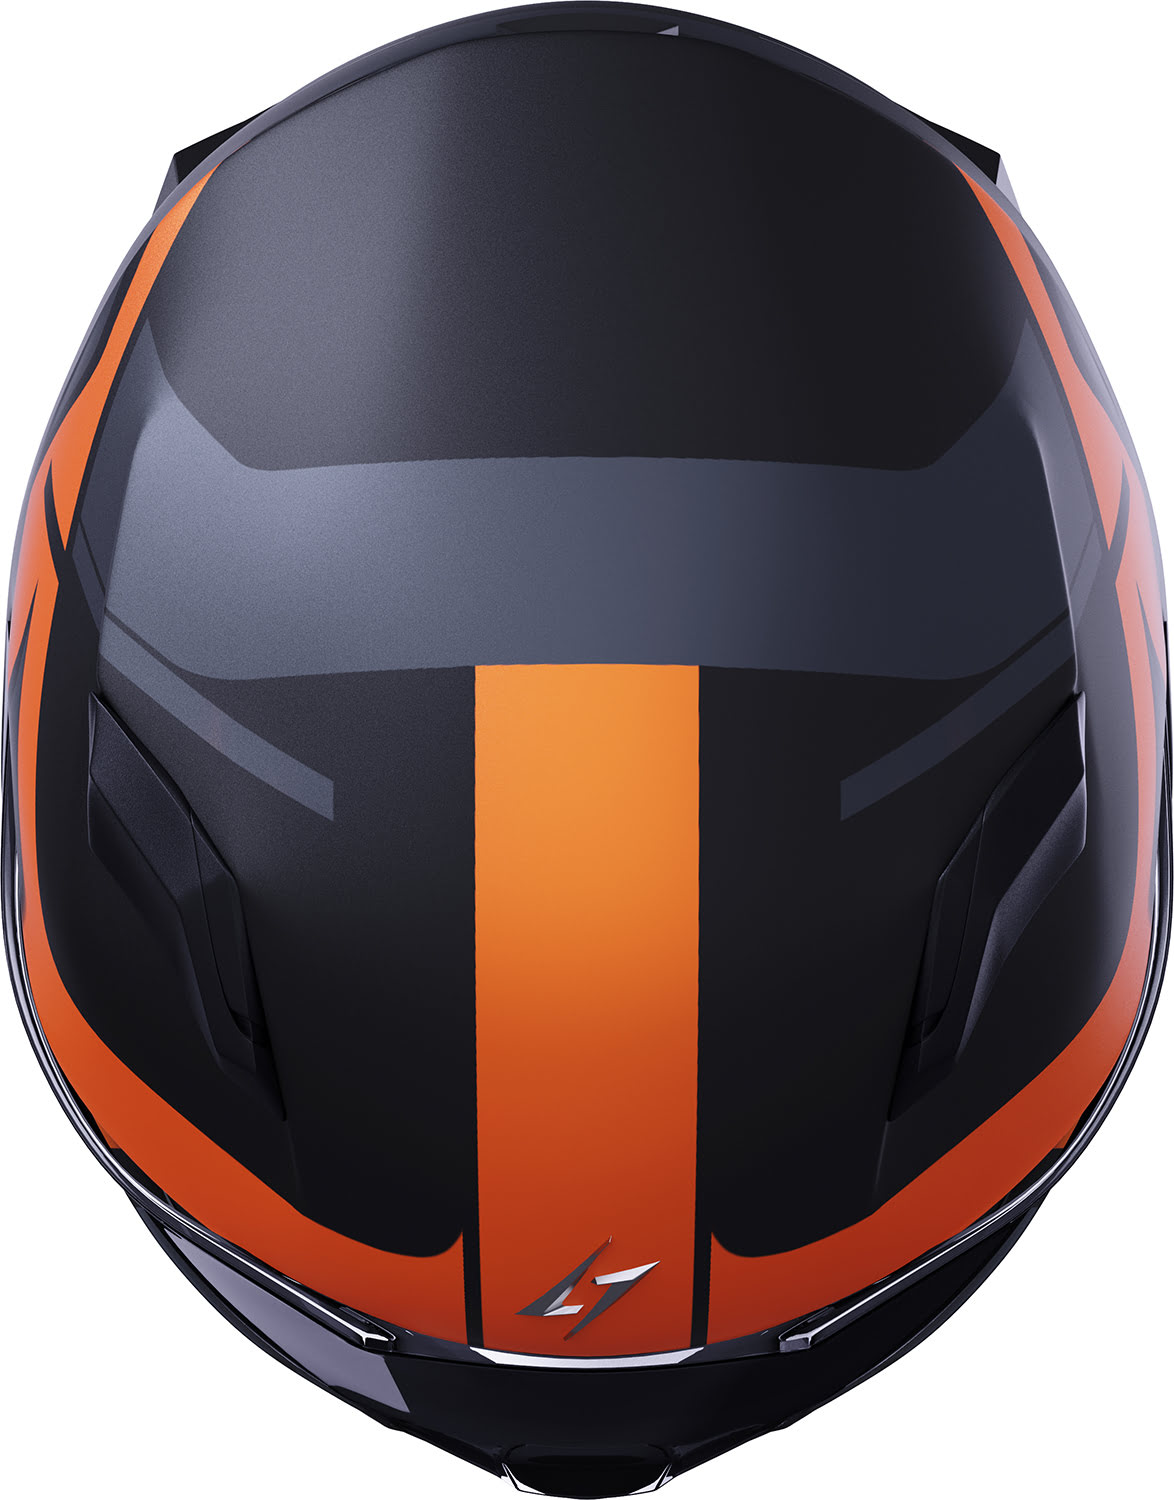 Helmet WISE RUNNER Orange Metal Matt STORMER 